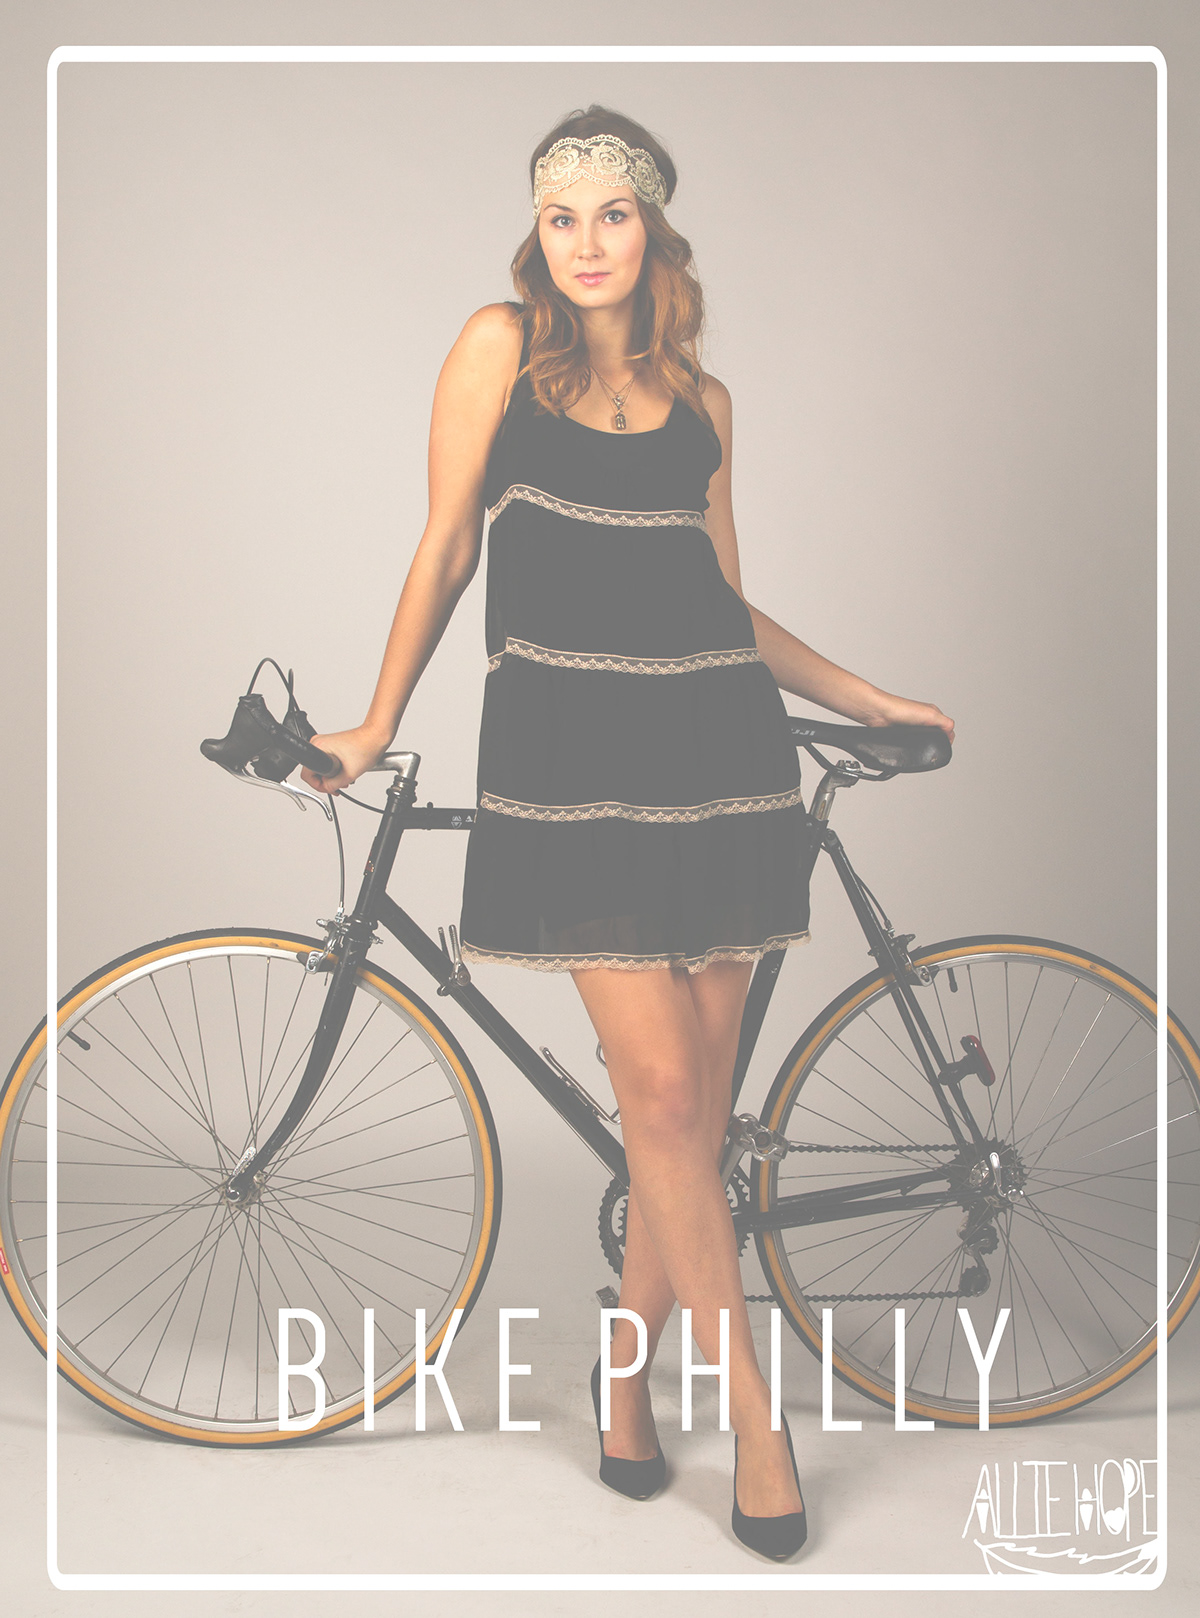 Bike road bike Philly philadelphia girl summer bohemian boho gypsy Bicycle outfit LBD flapper vintage old school